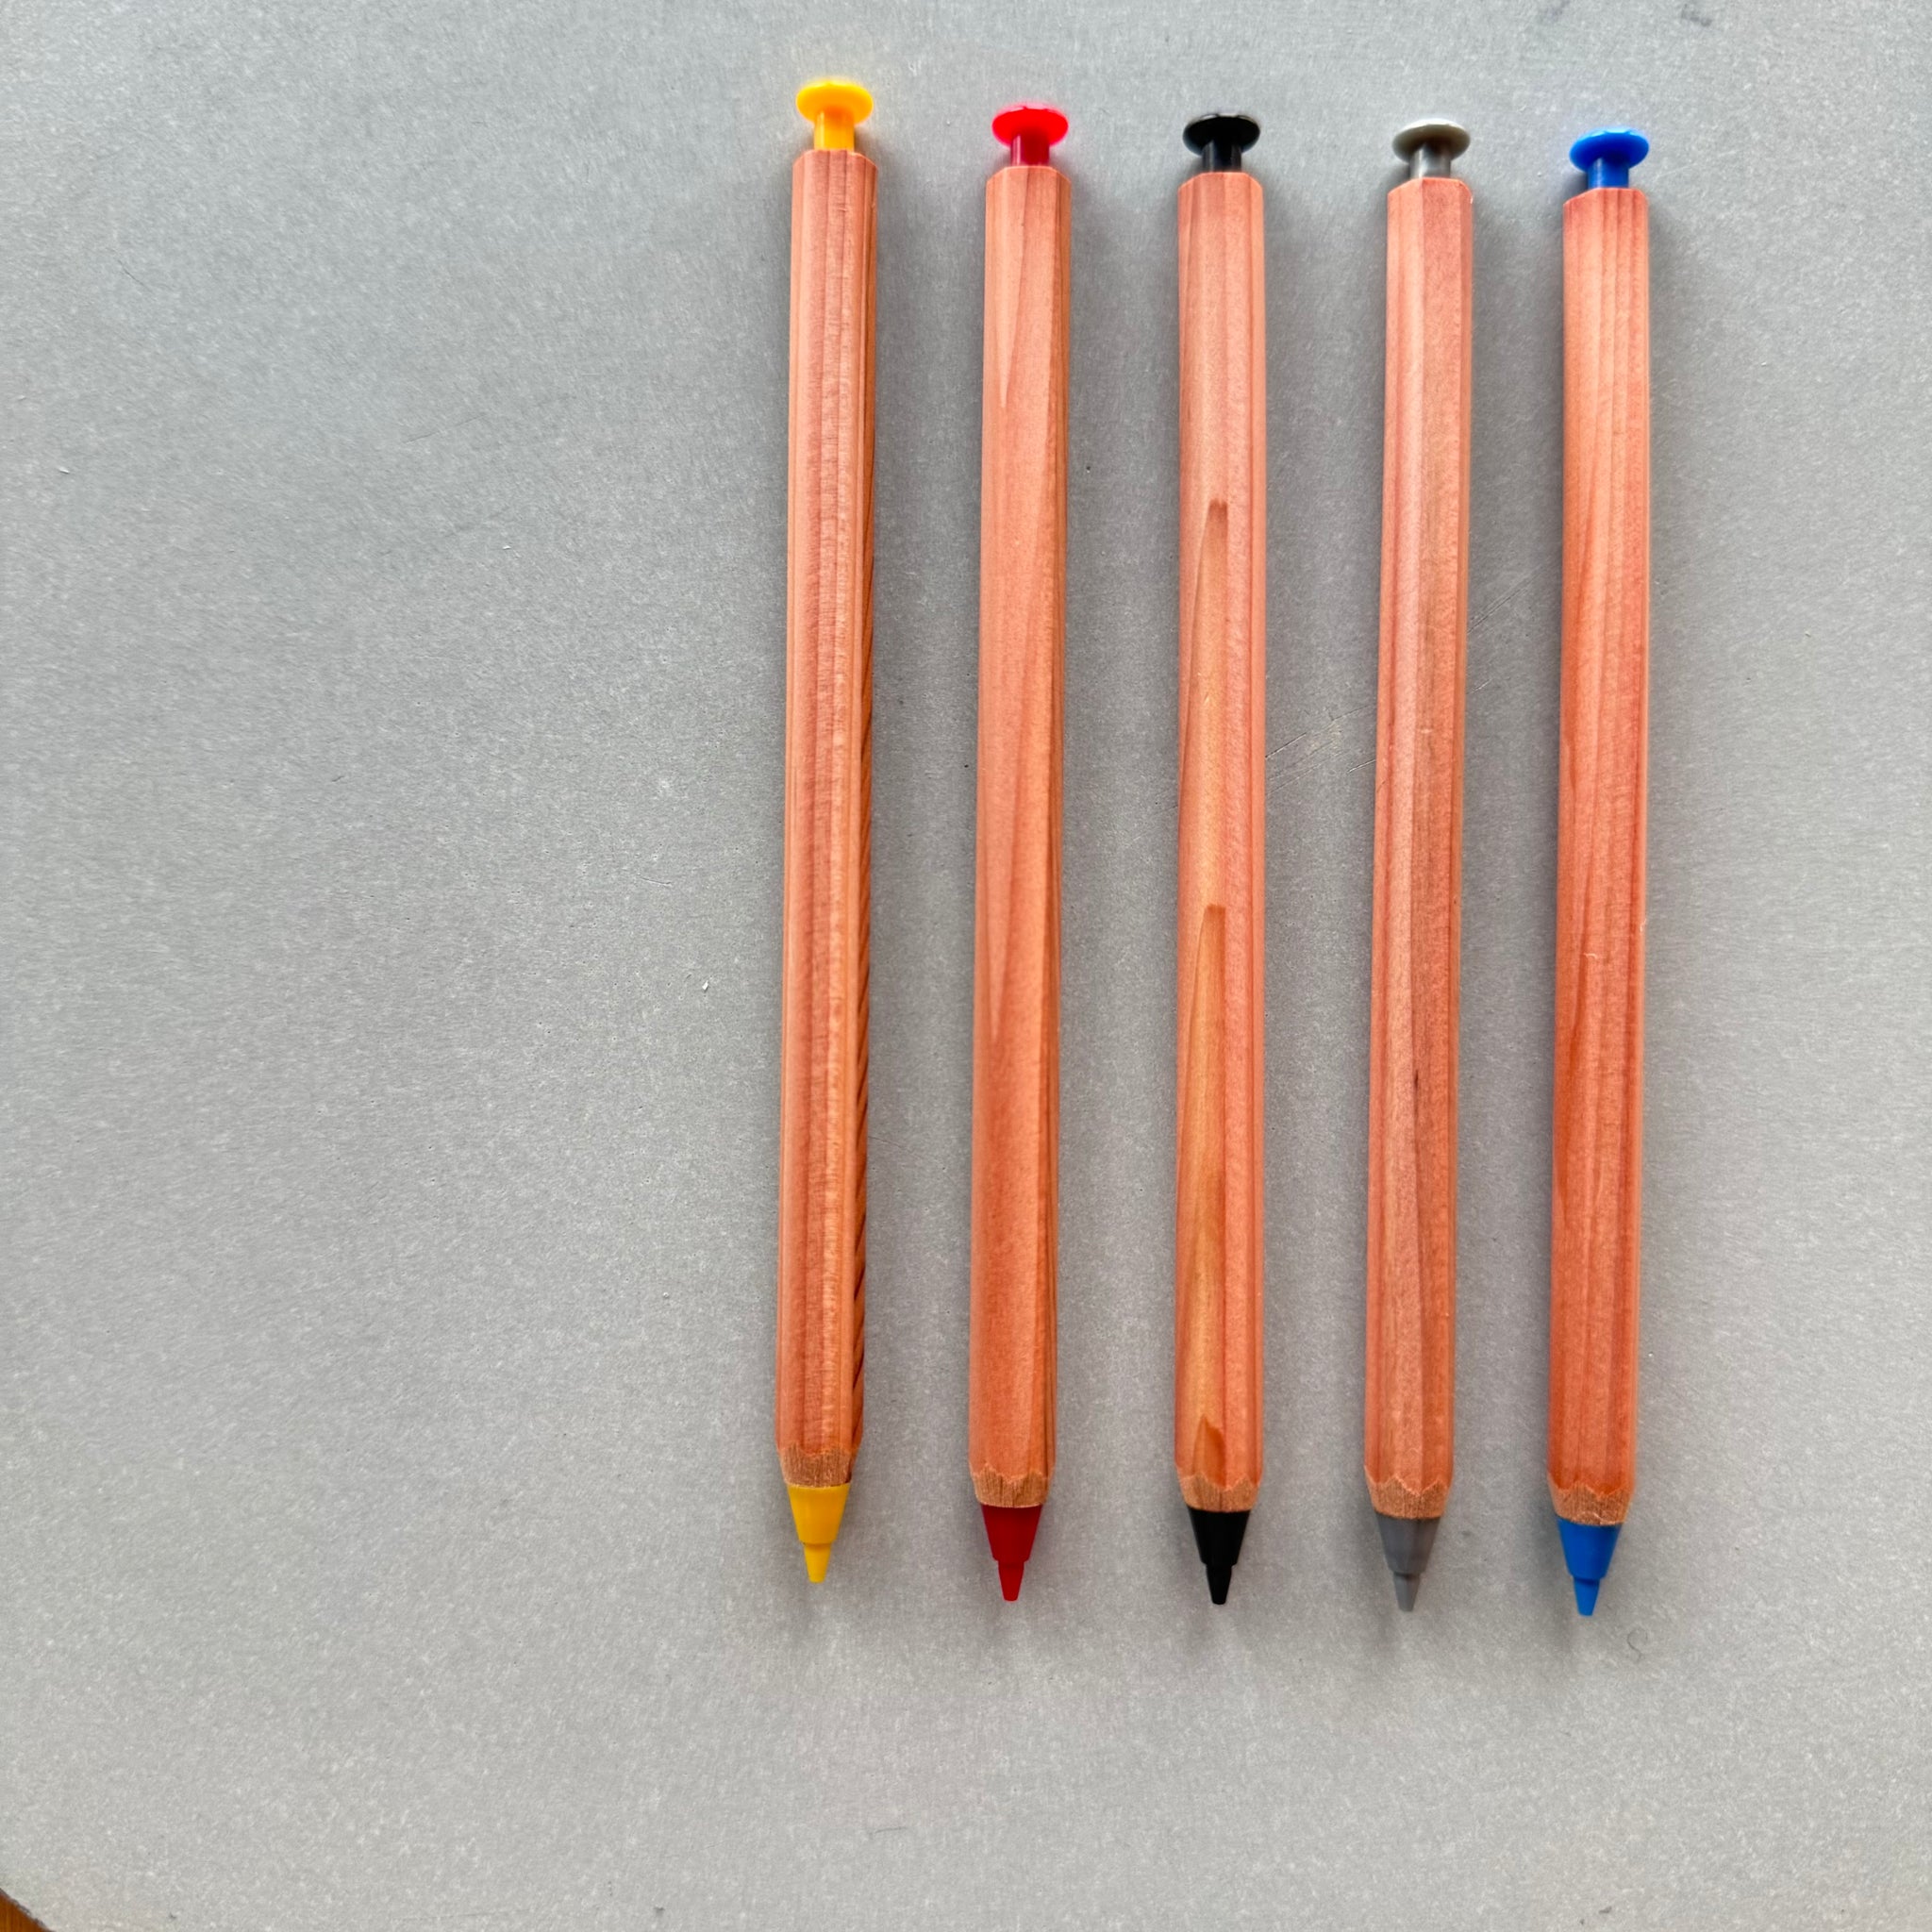 Woody Hexagon Mechanical Pencil by BEGOODY pencils.